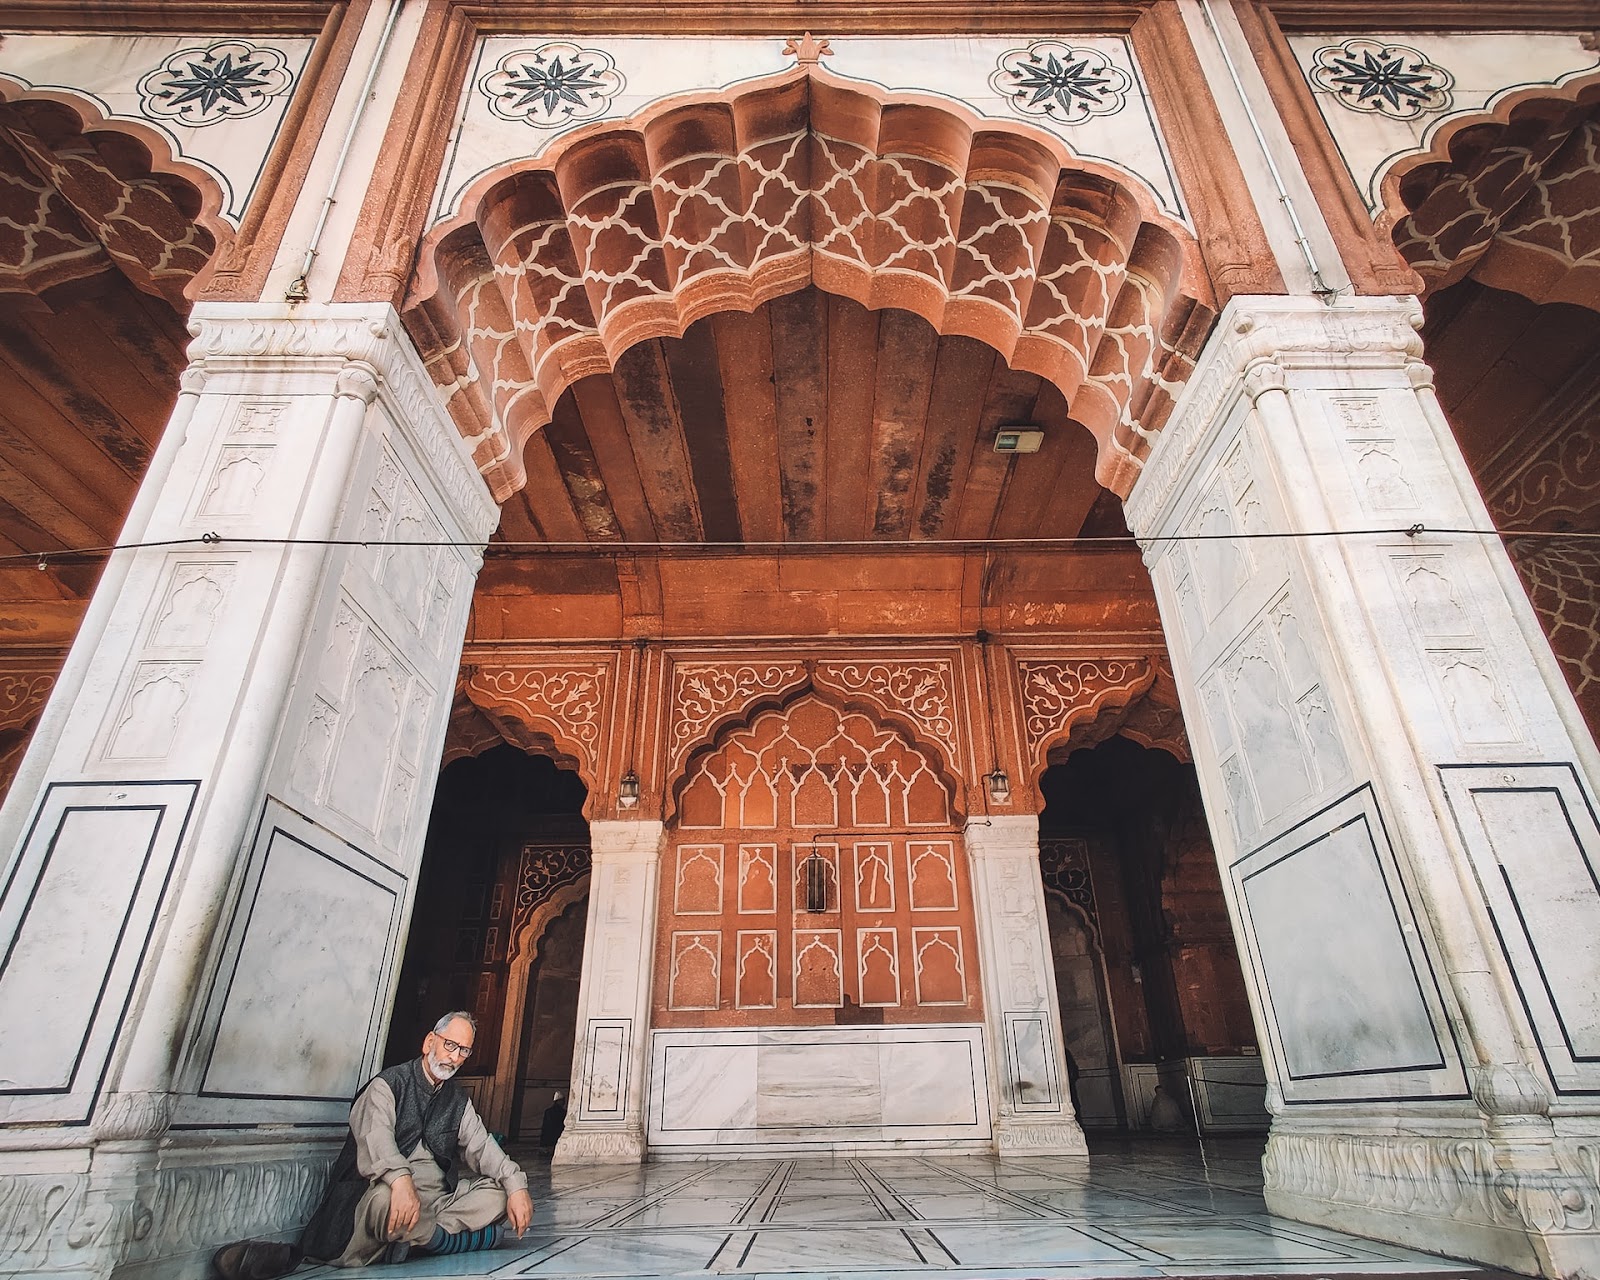 Photograph of a man sitting inside Jama Masjida